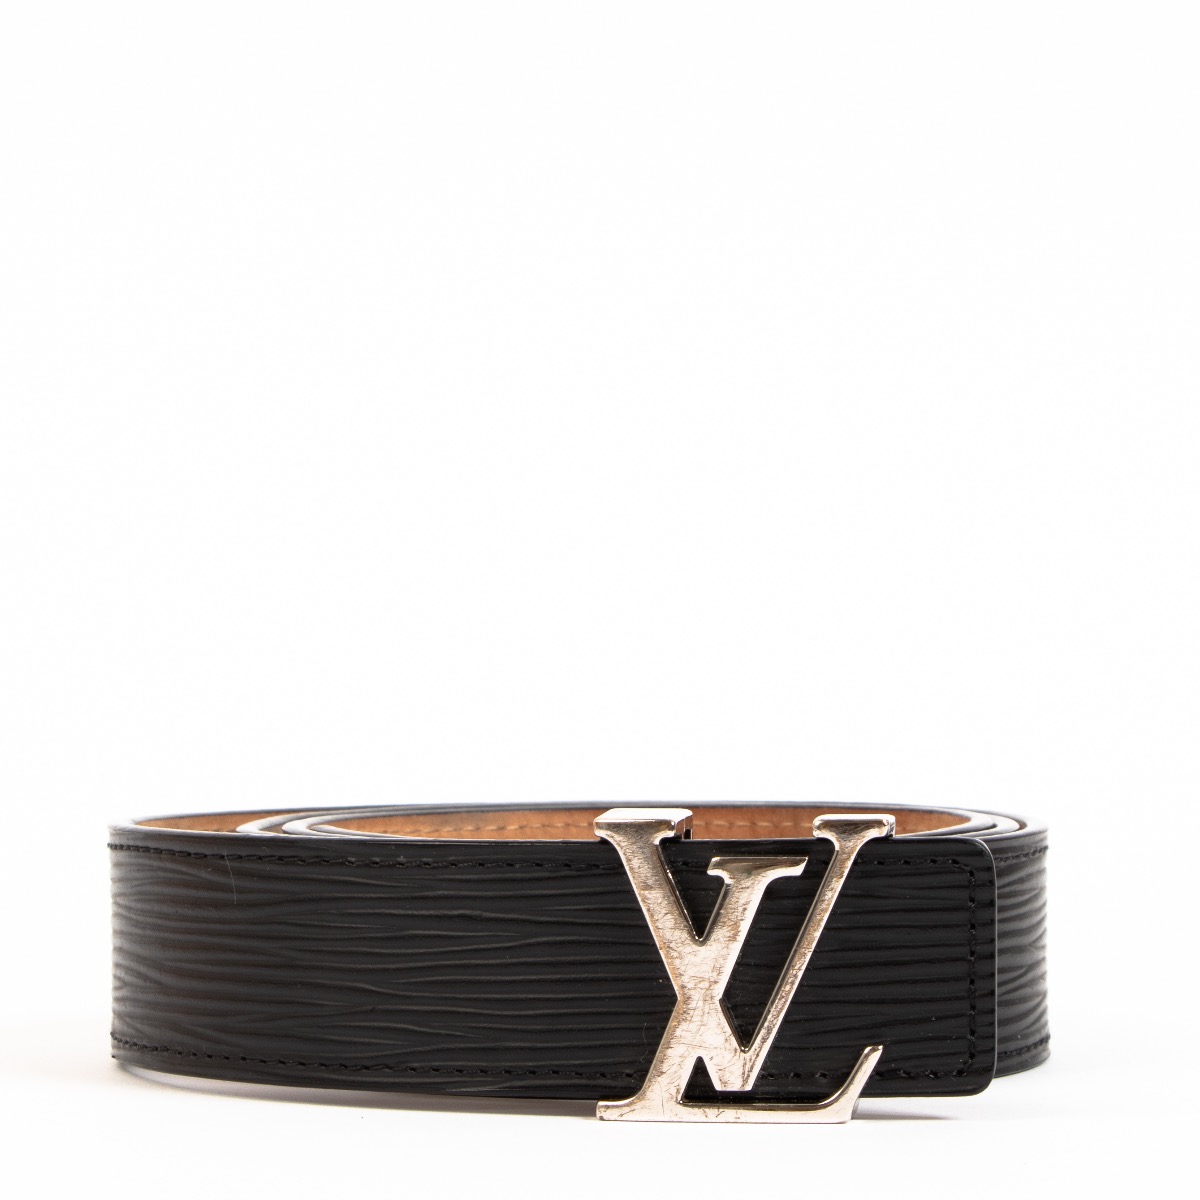 Louis Vuitton, an Epi leather belt, 2012, size 95/38. - Bukowskis